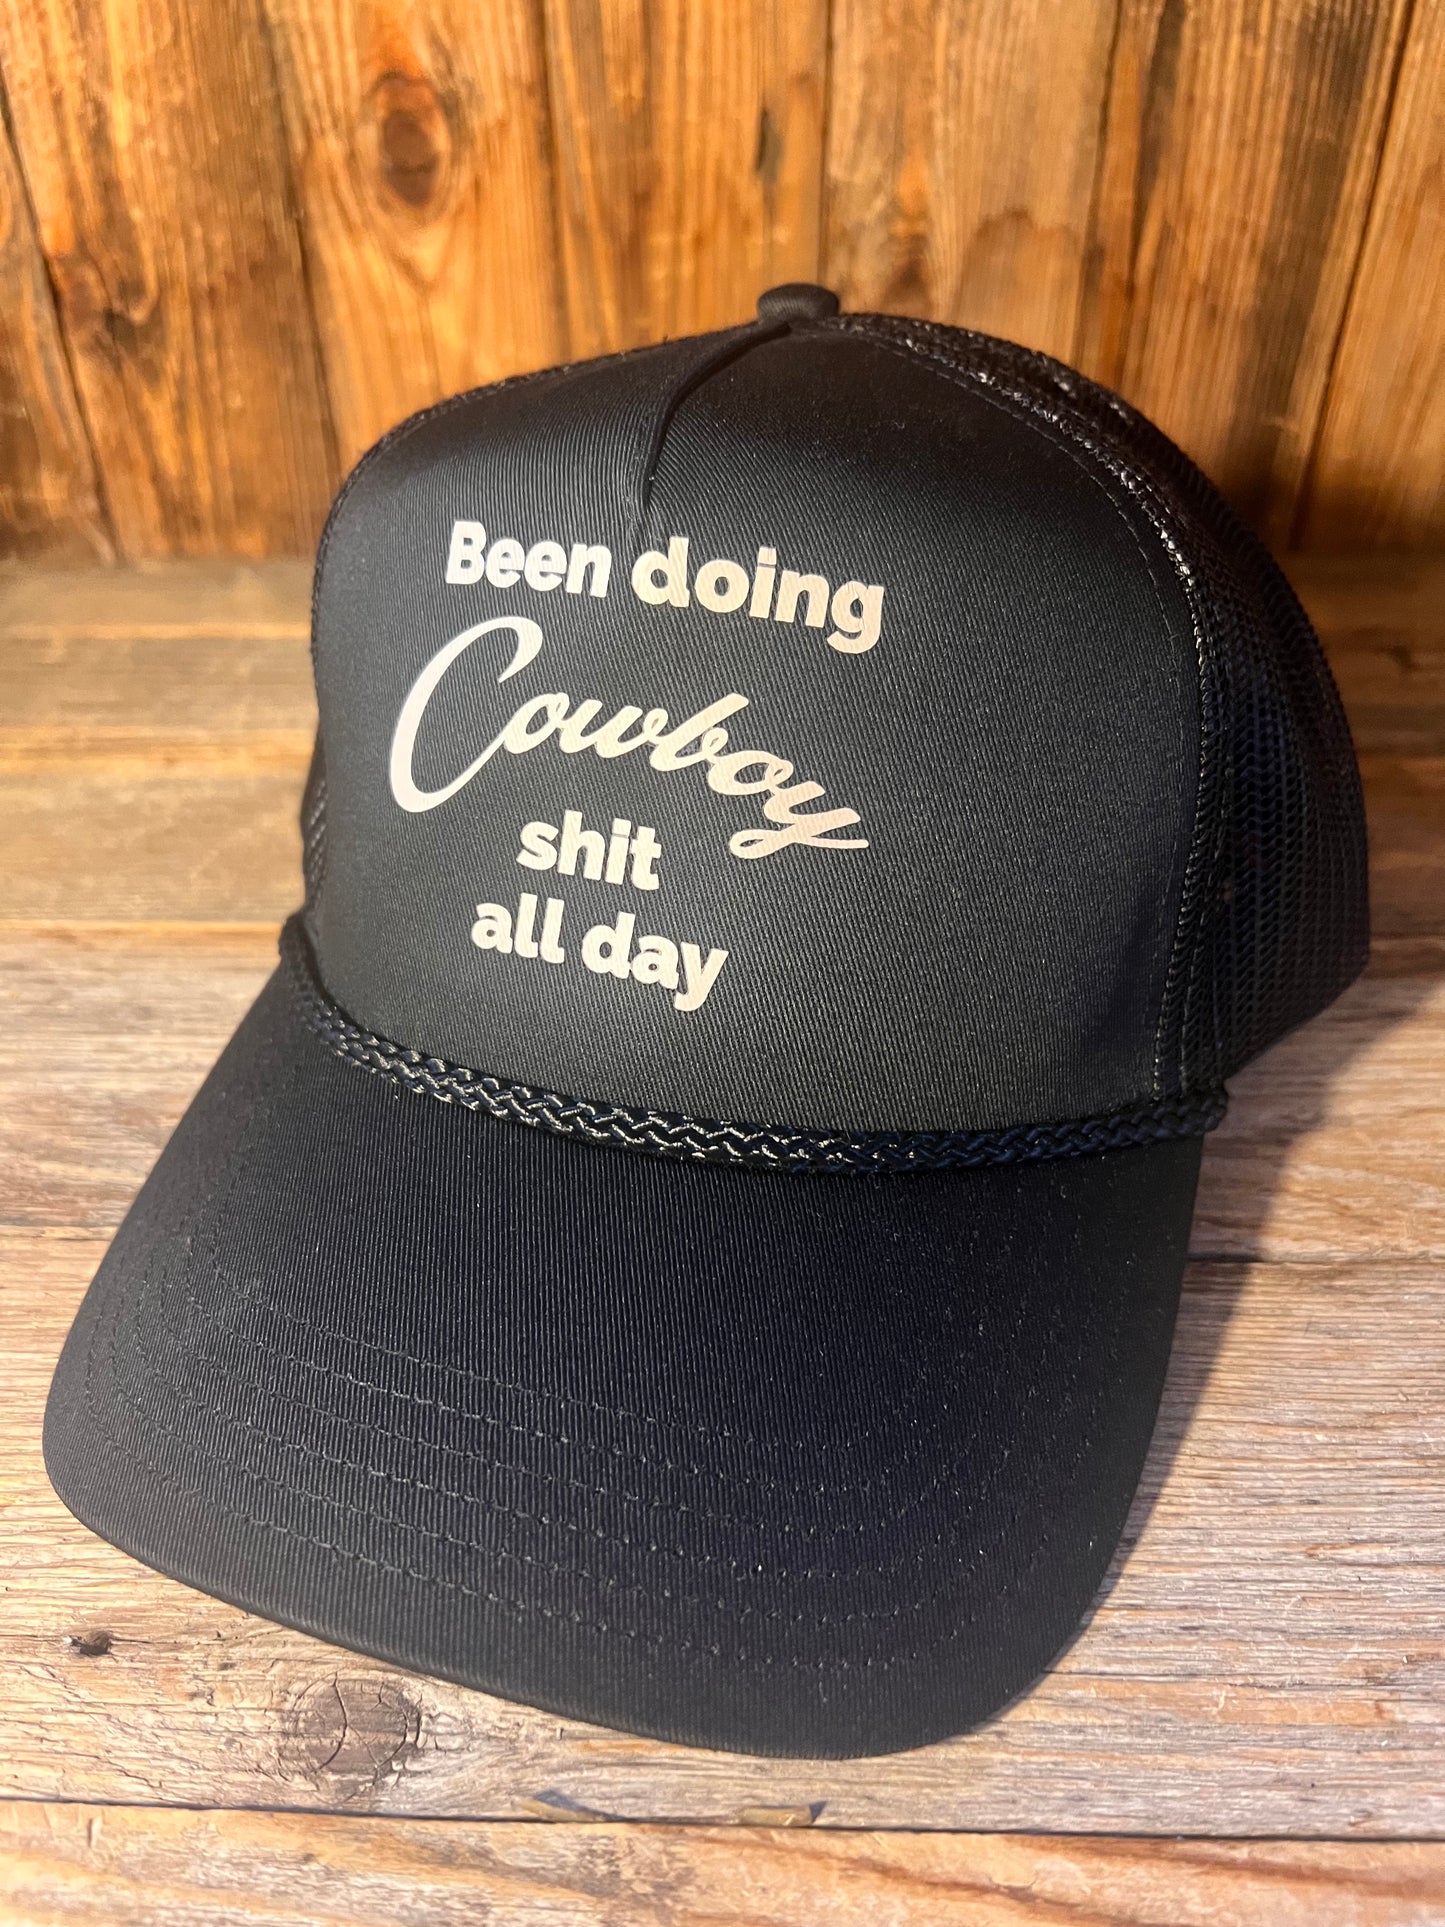 Cowboy Shit Hats